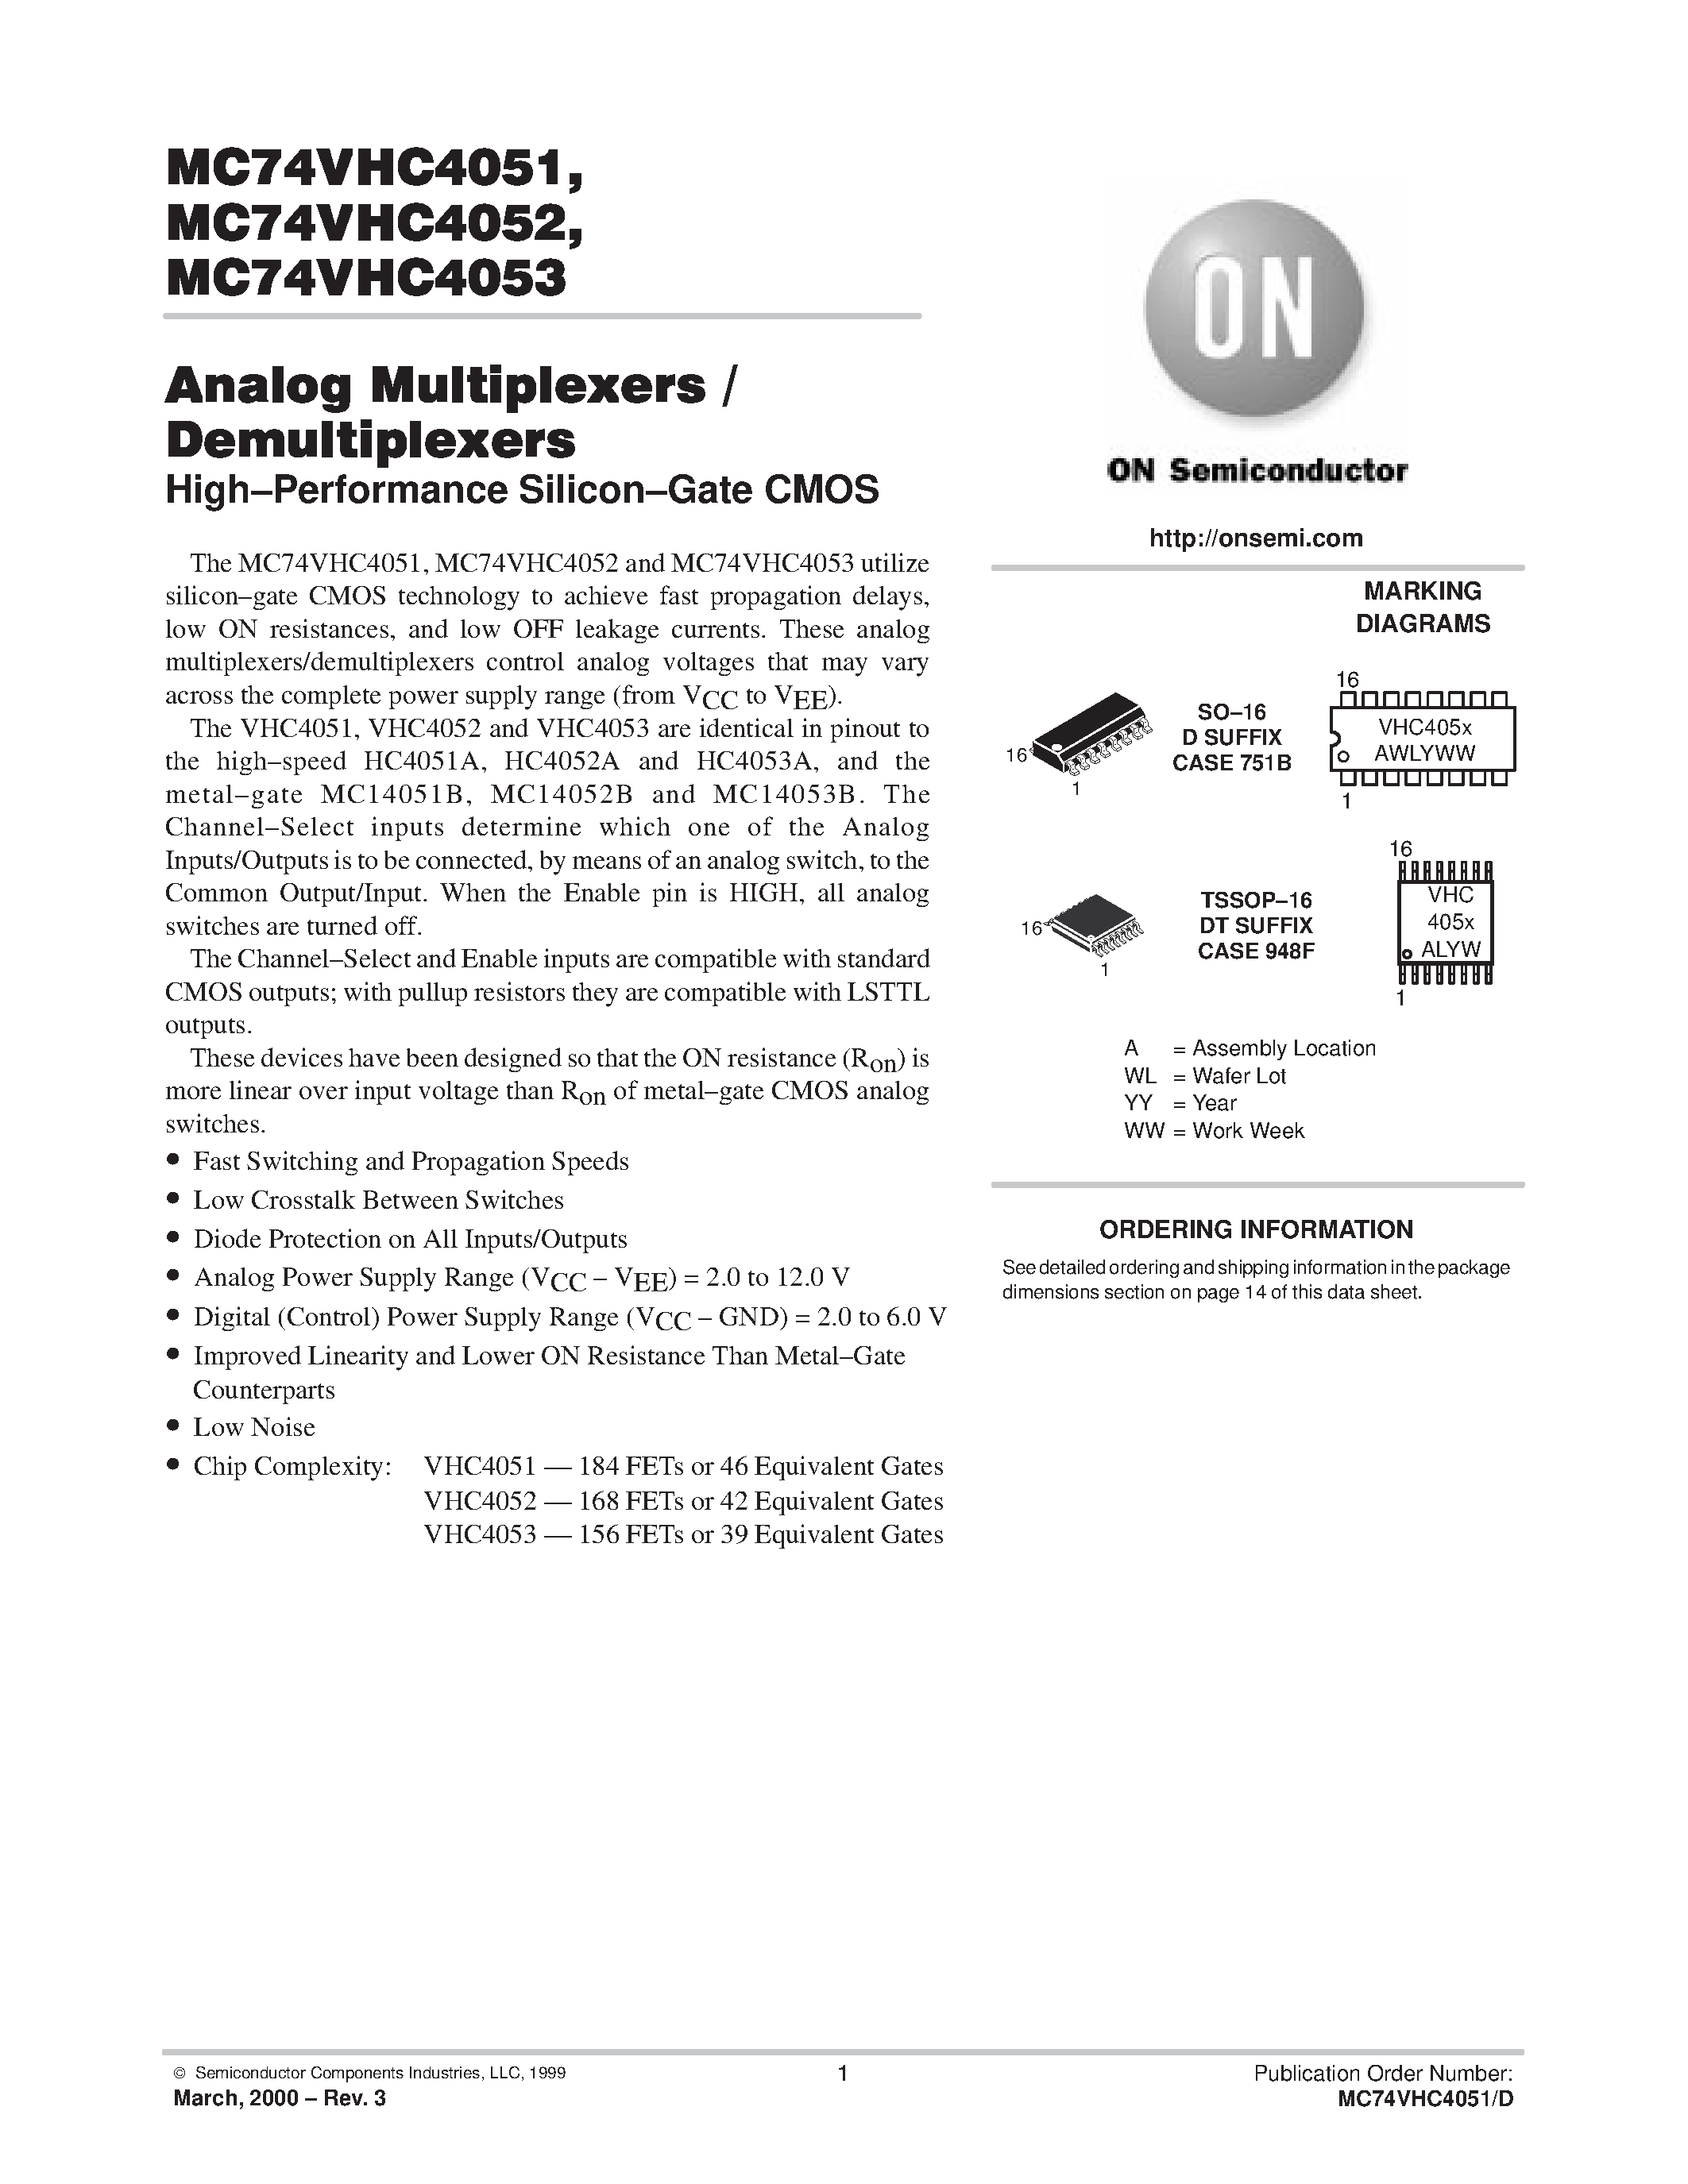 Datasheet MC74VHC4051 - (MC74VHC4051 - MC74VHC4053) Analog Multiplexers/Demultiplexers page 1